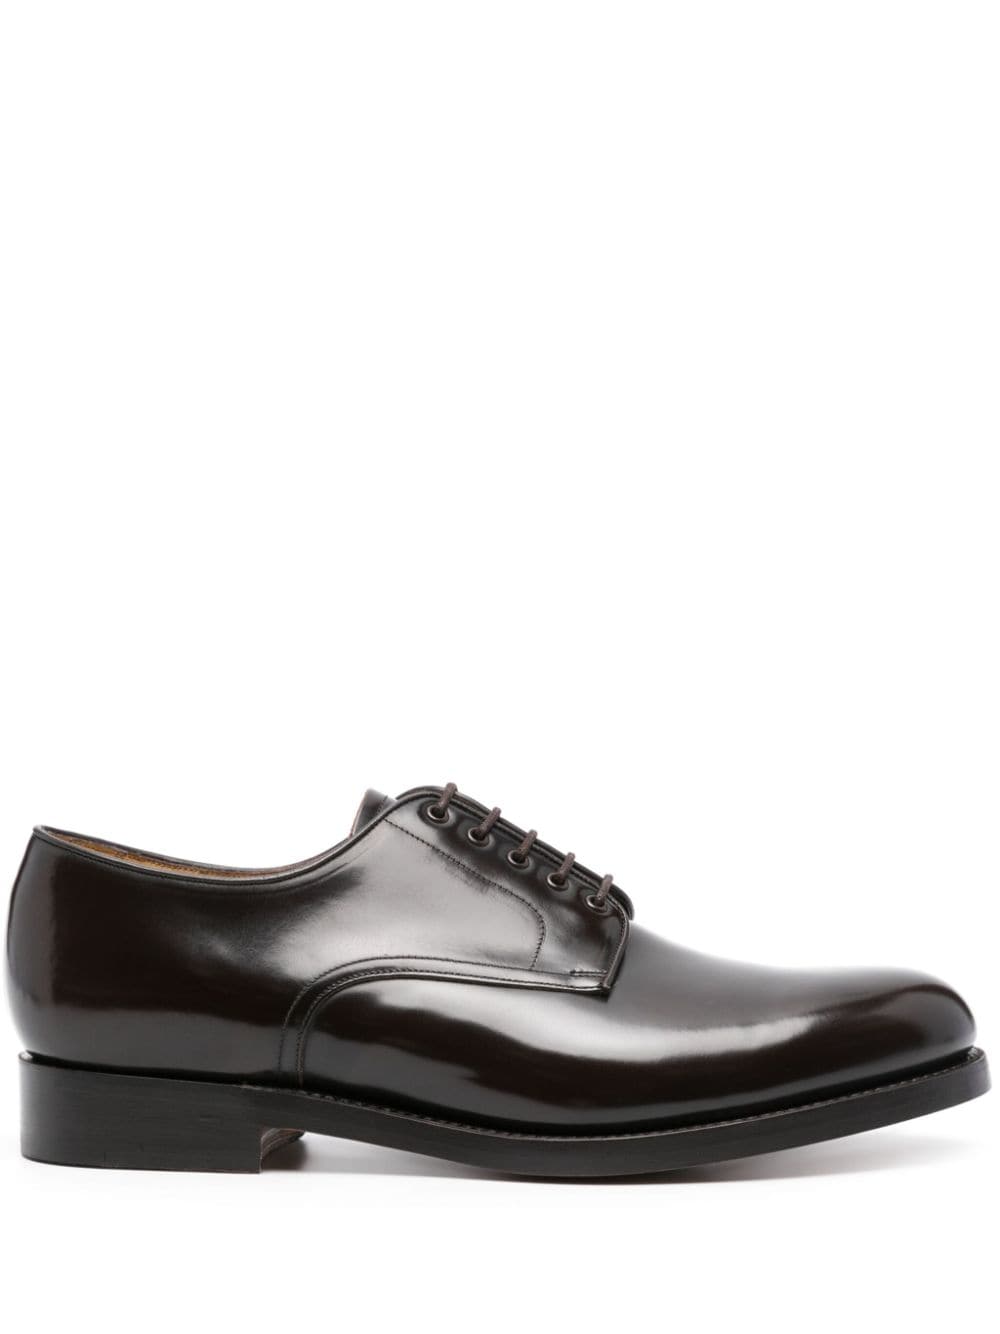 FURSAC leather derby shoes - Marrone